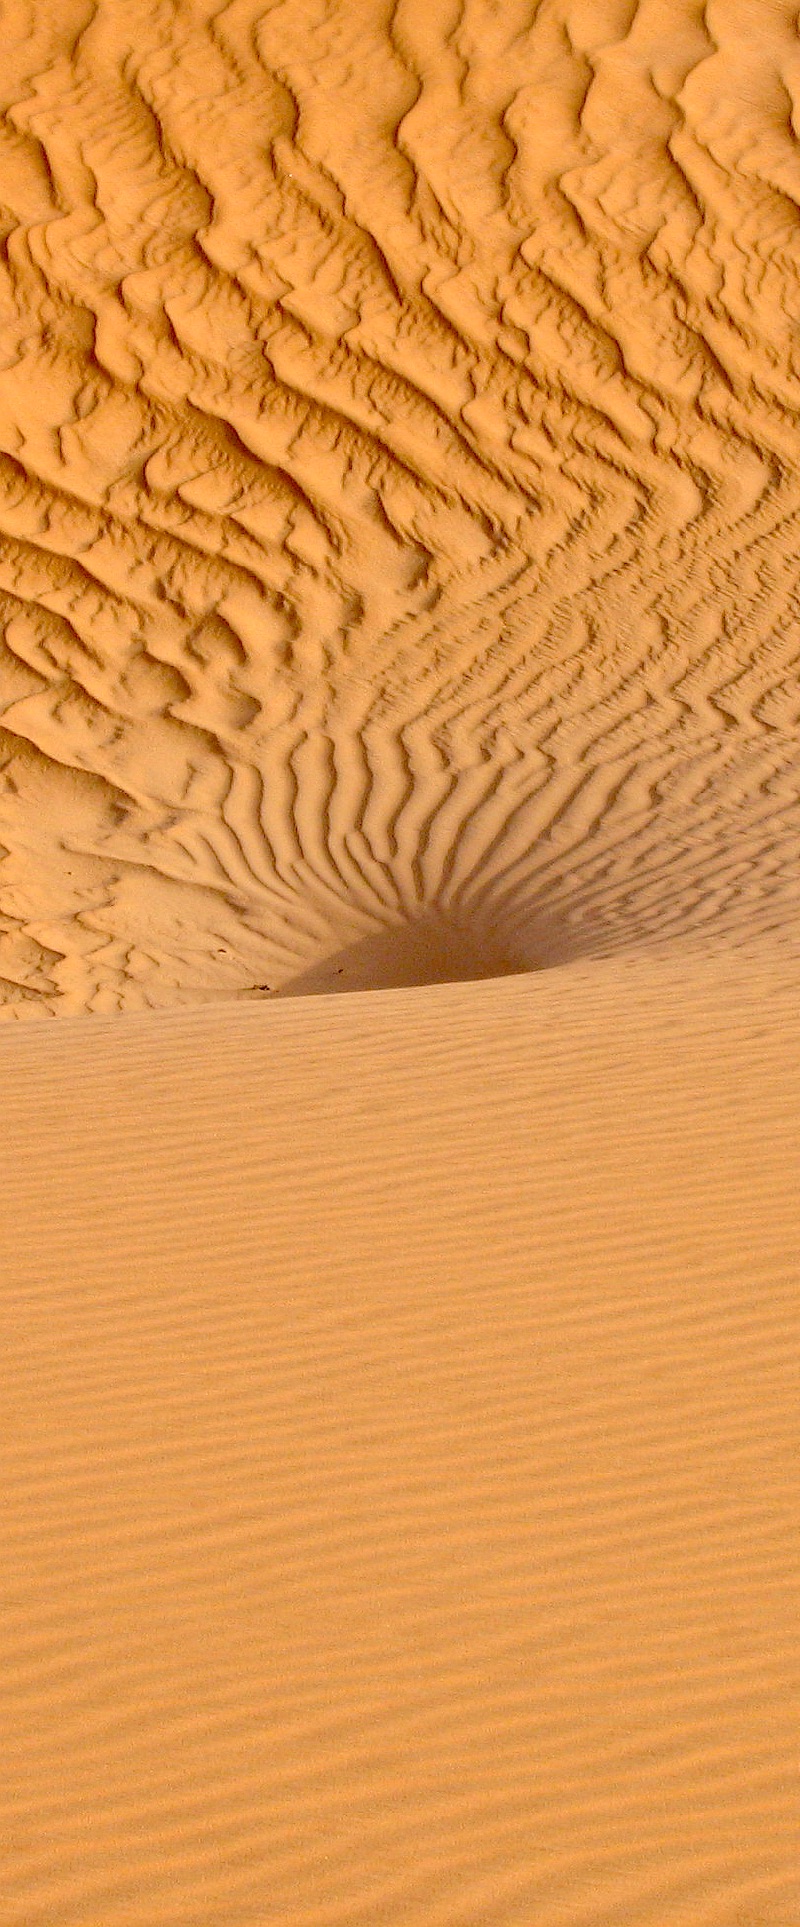 Obari sand sea, Libya. Image credit A.Wheeler